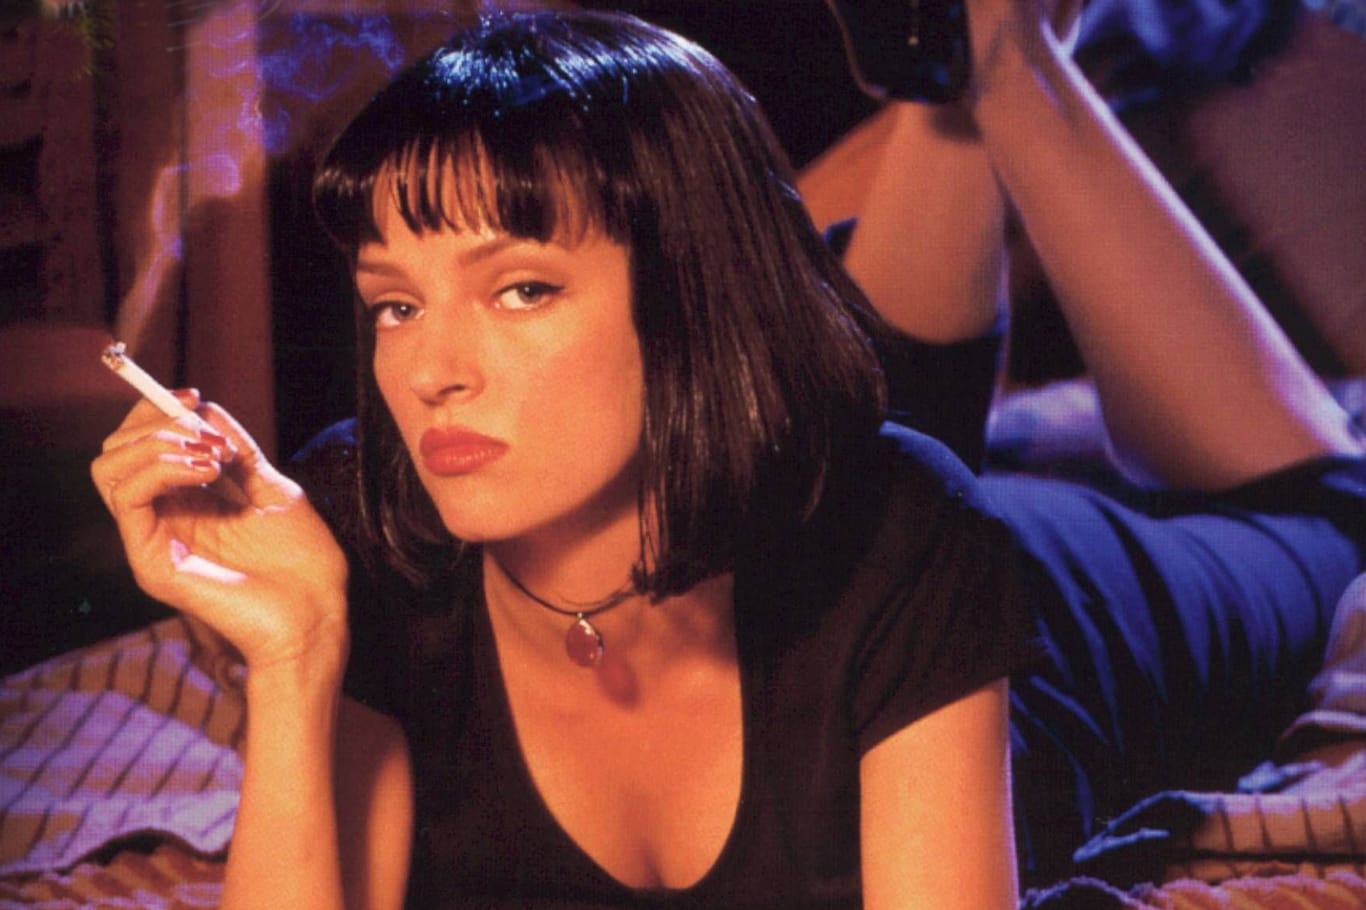 Uma Thurman: In "Pulp Fiction" spielte sie die Gangsterbraut Mia Wallace.